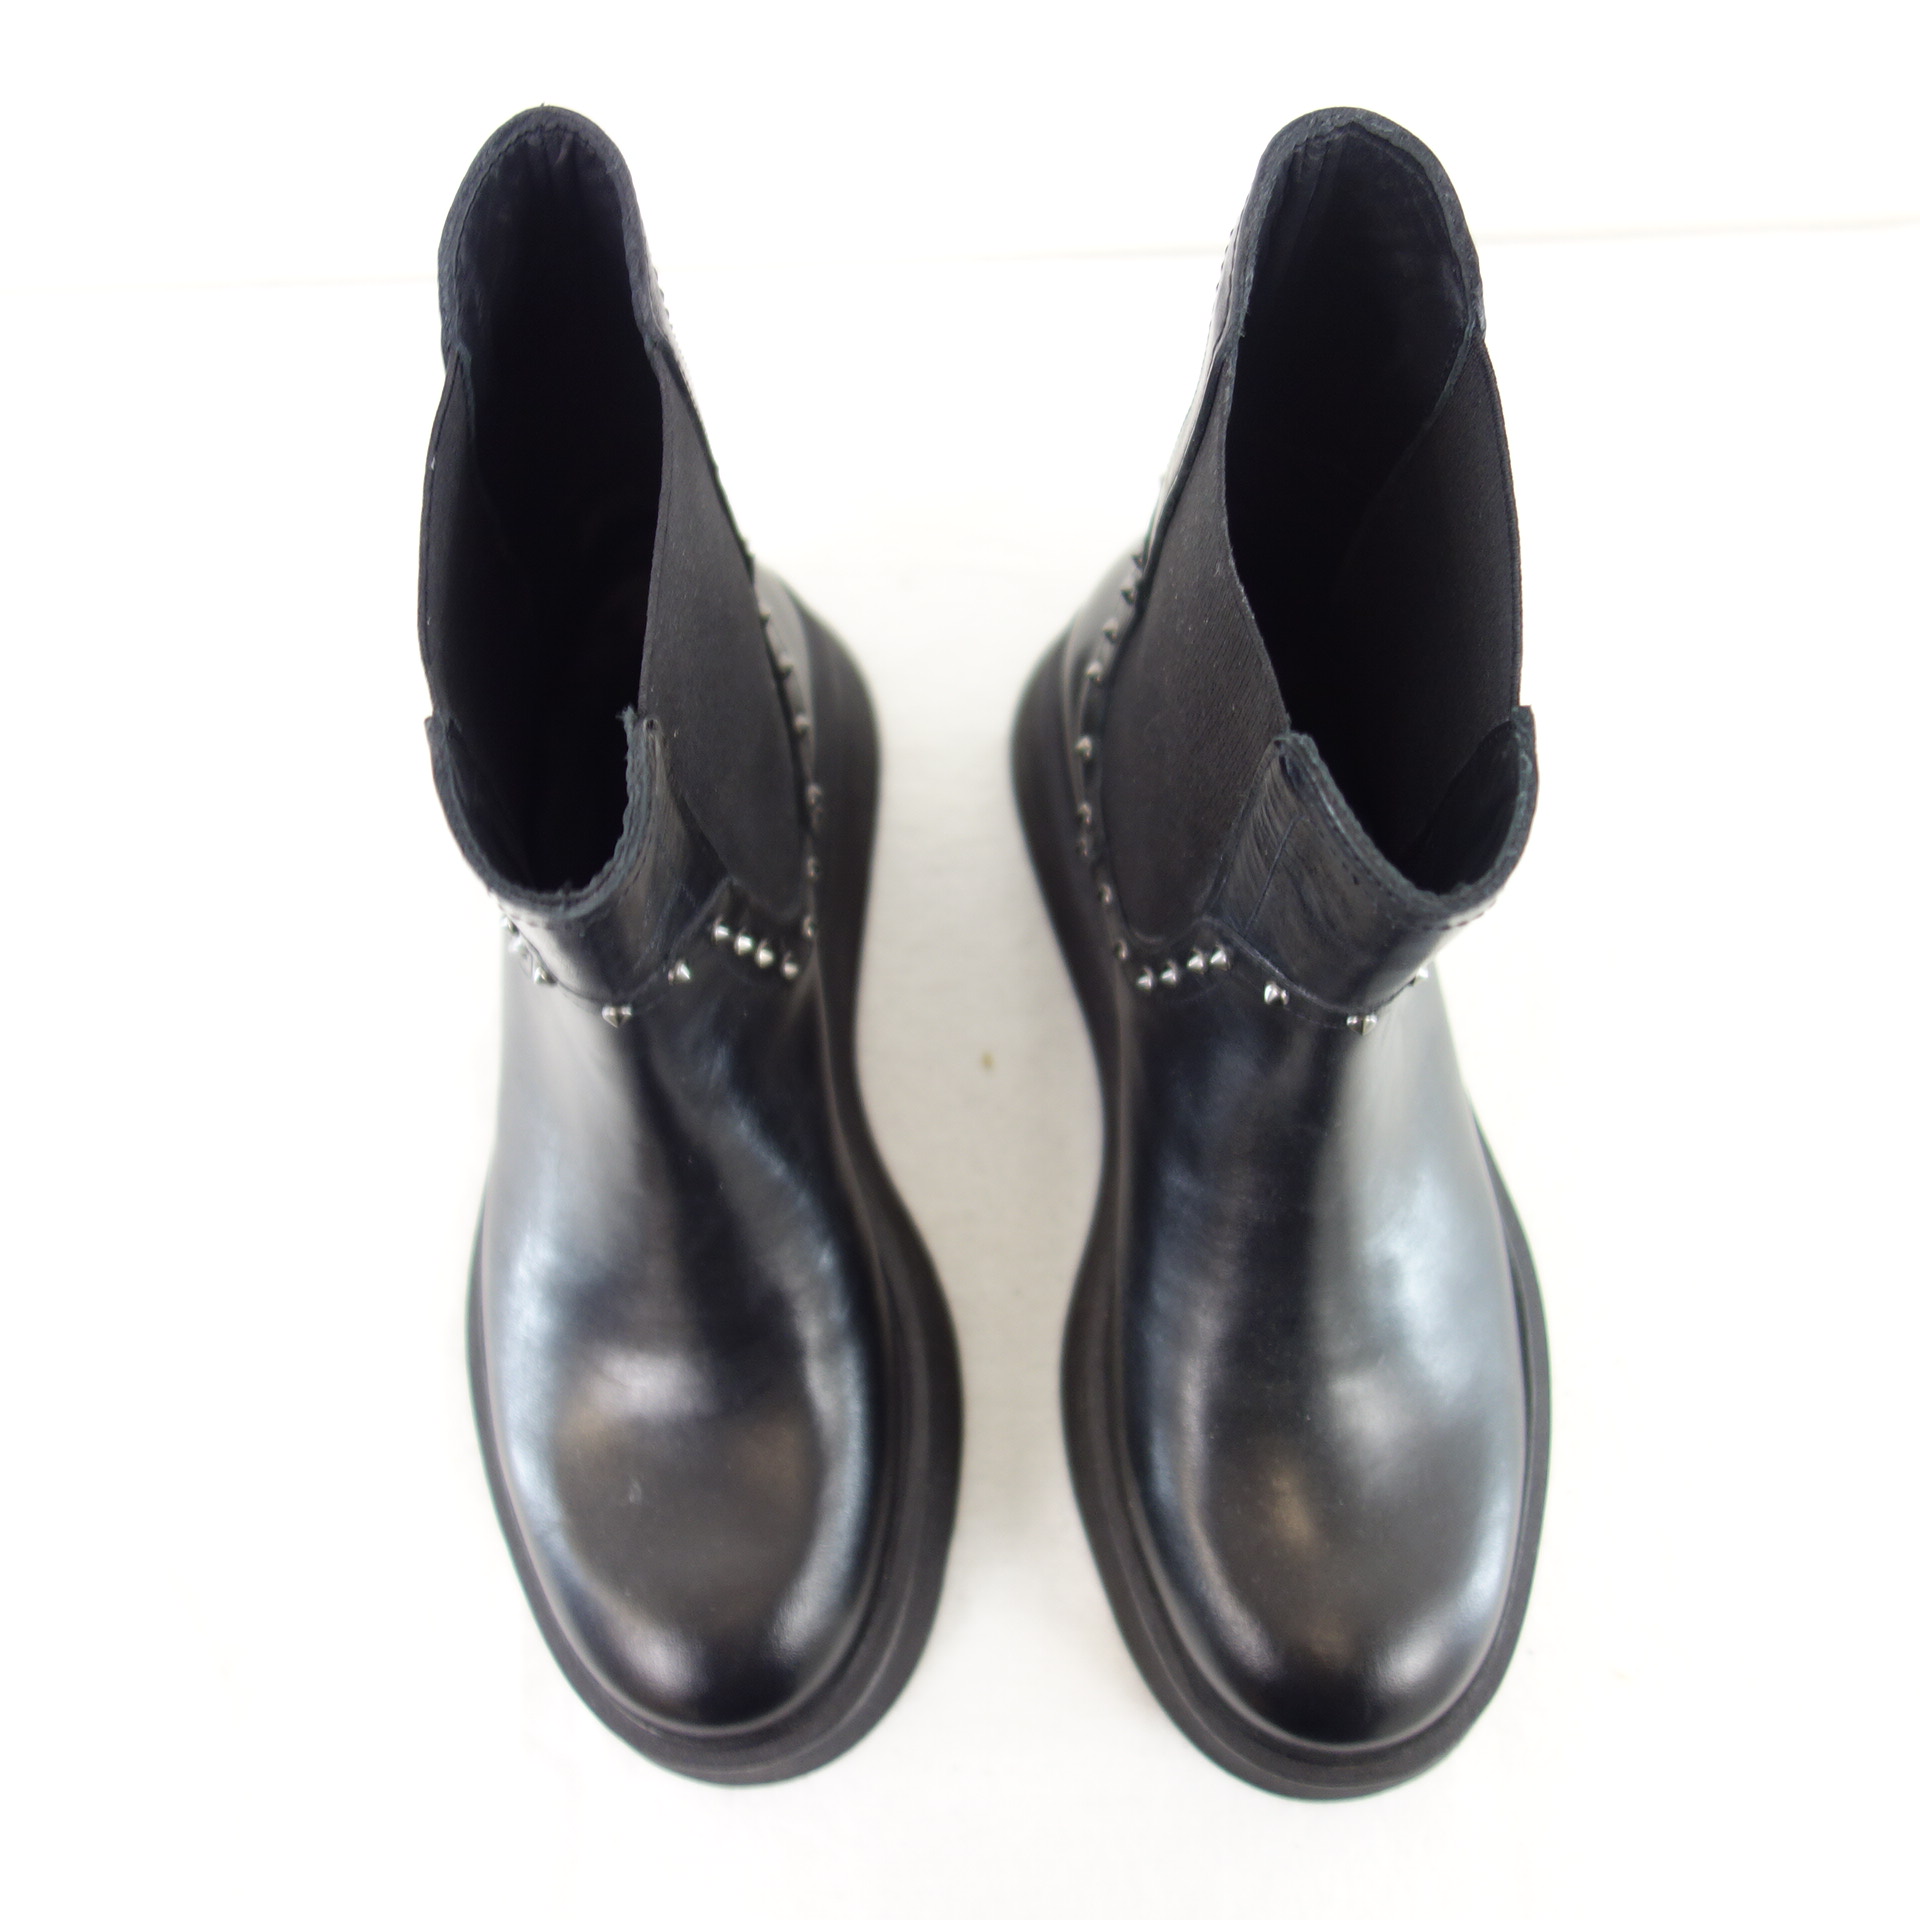 BUKELA Damen Schuhe Chelsea Boots Stiefeletten Stiefel Schwarz Leder Gr 37